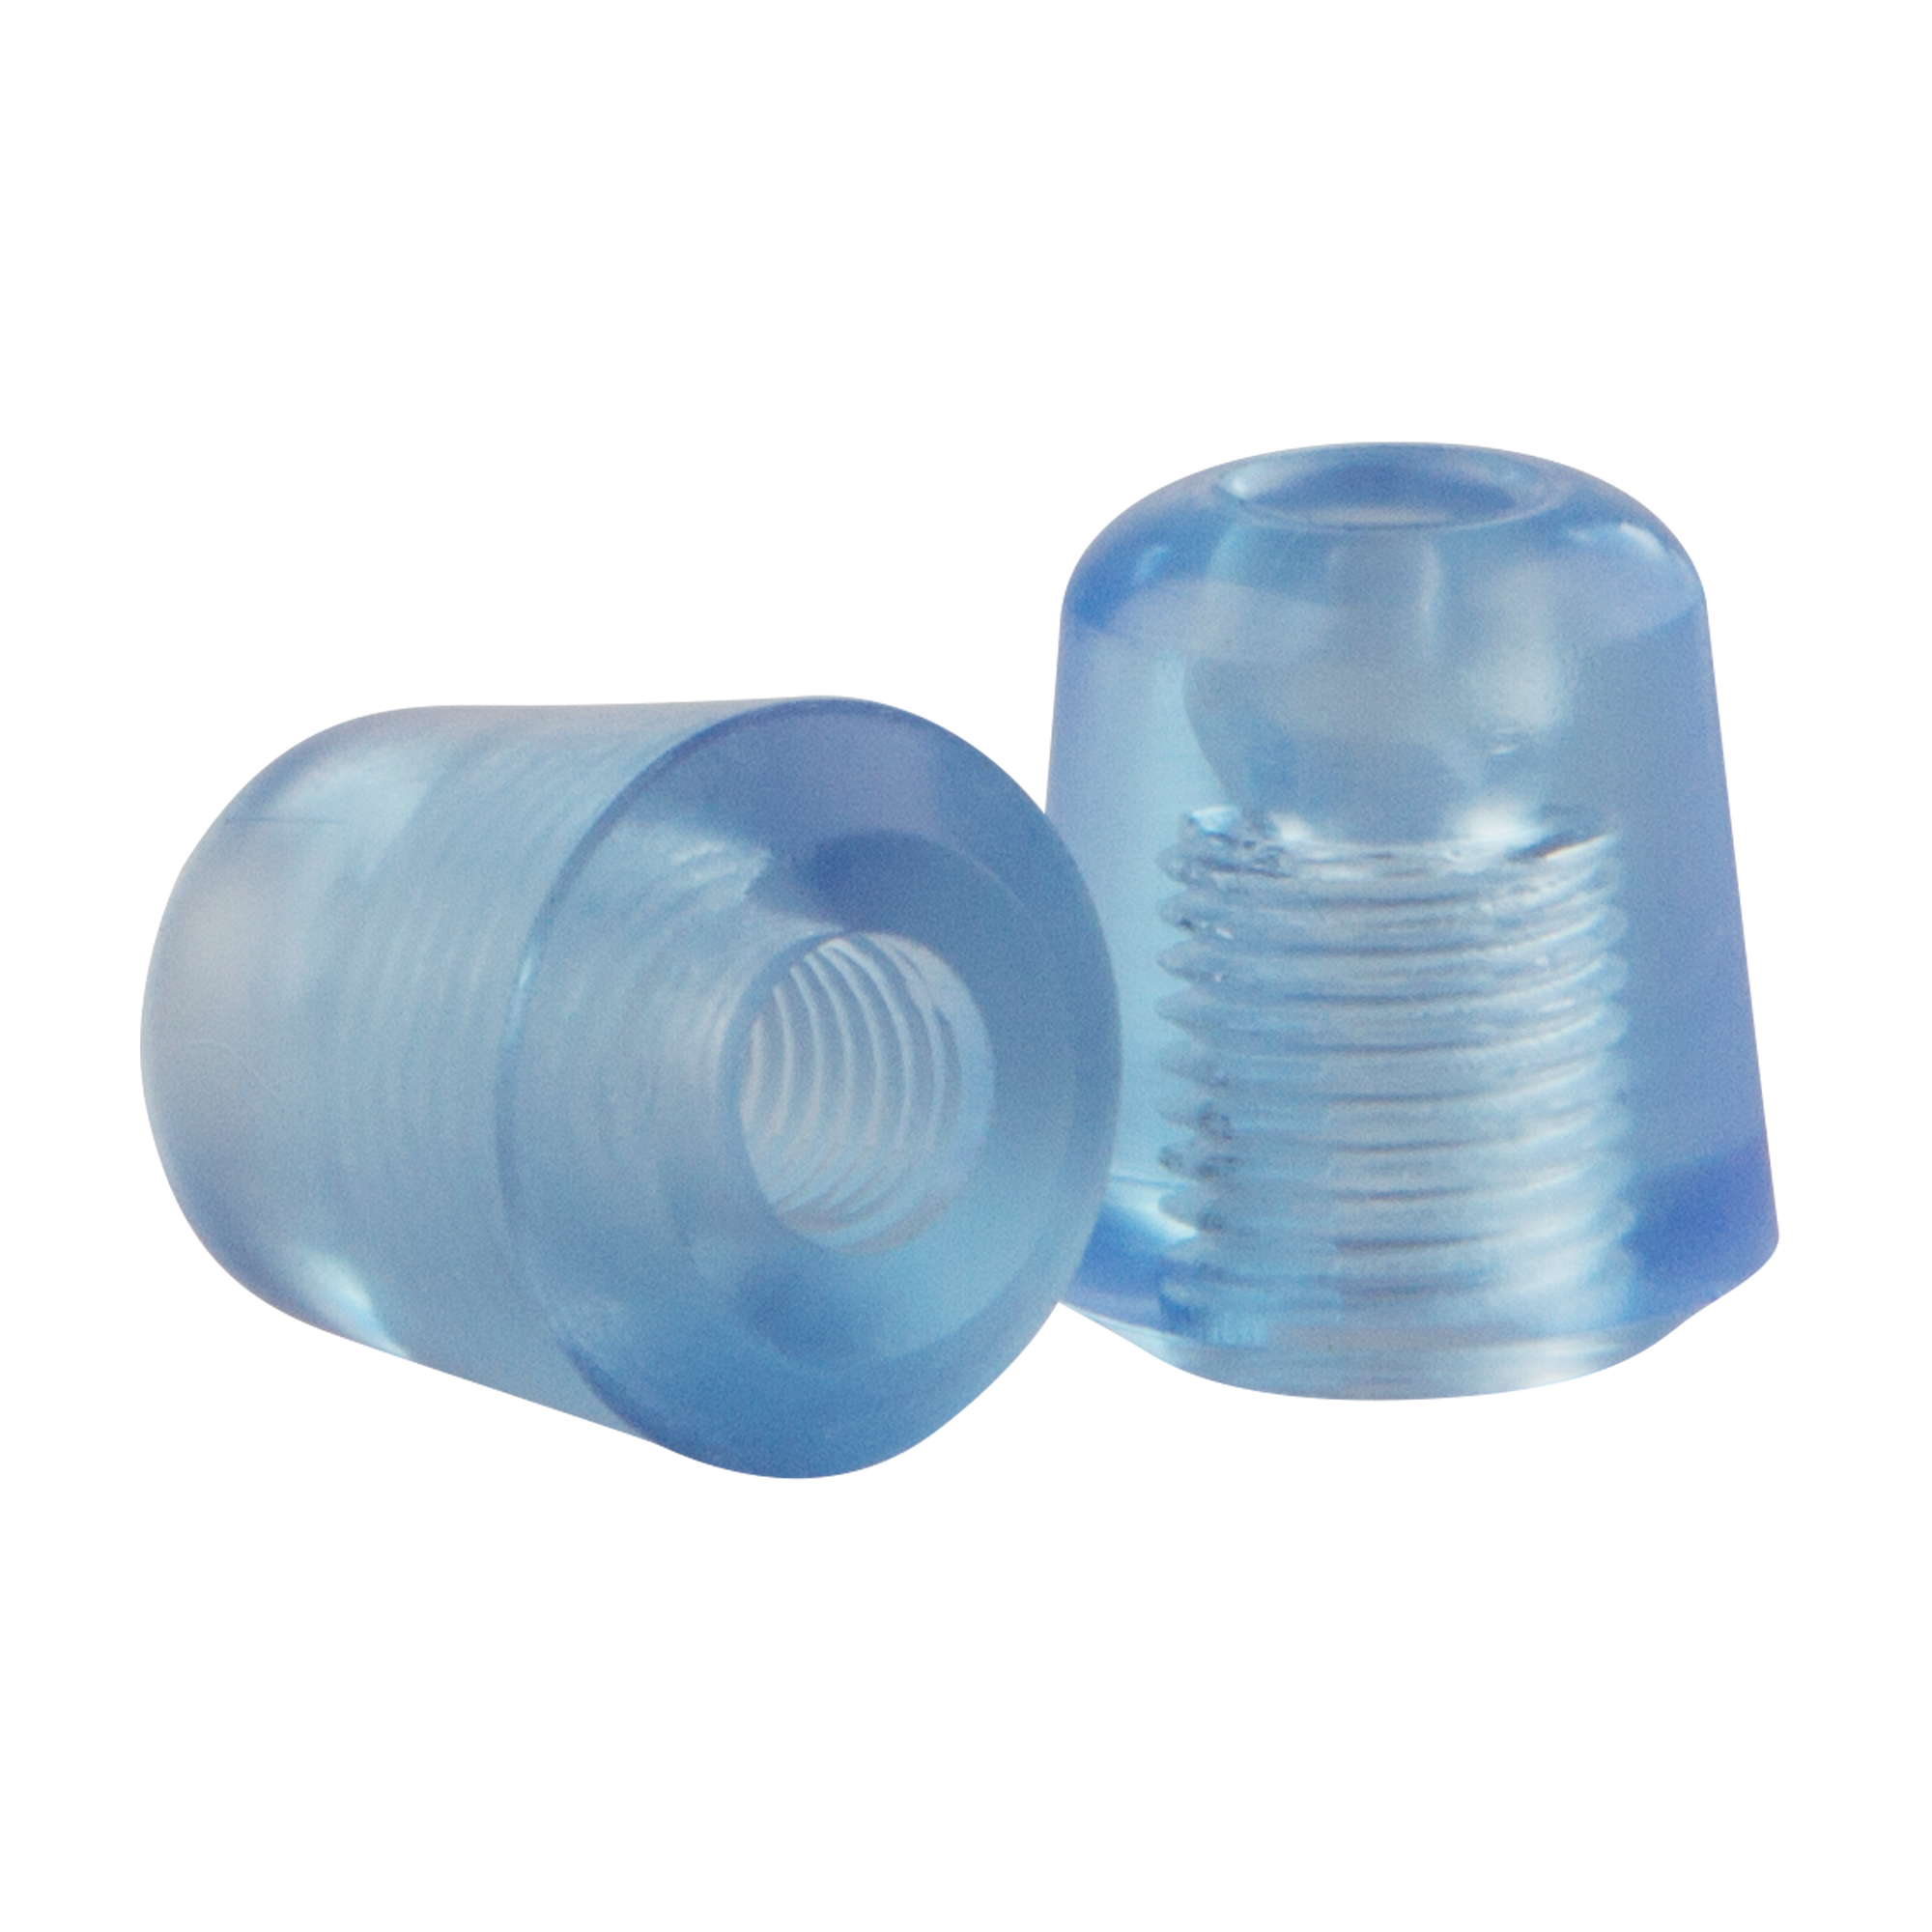 Soft-Ohroliven Blau/Transparent ID 4,5 mm Universal für Stethoskope